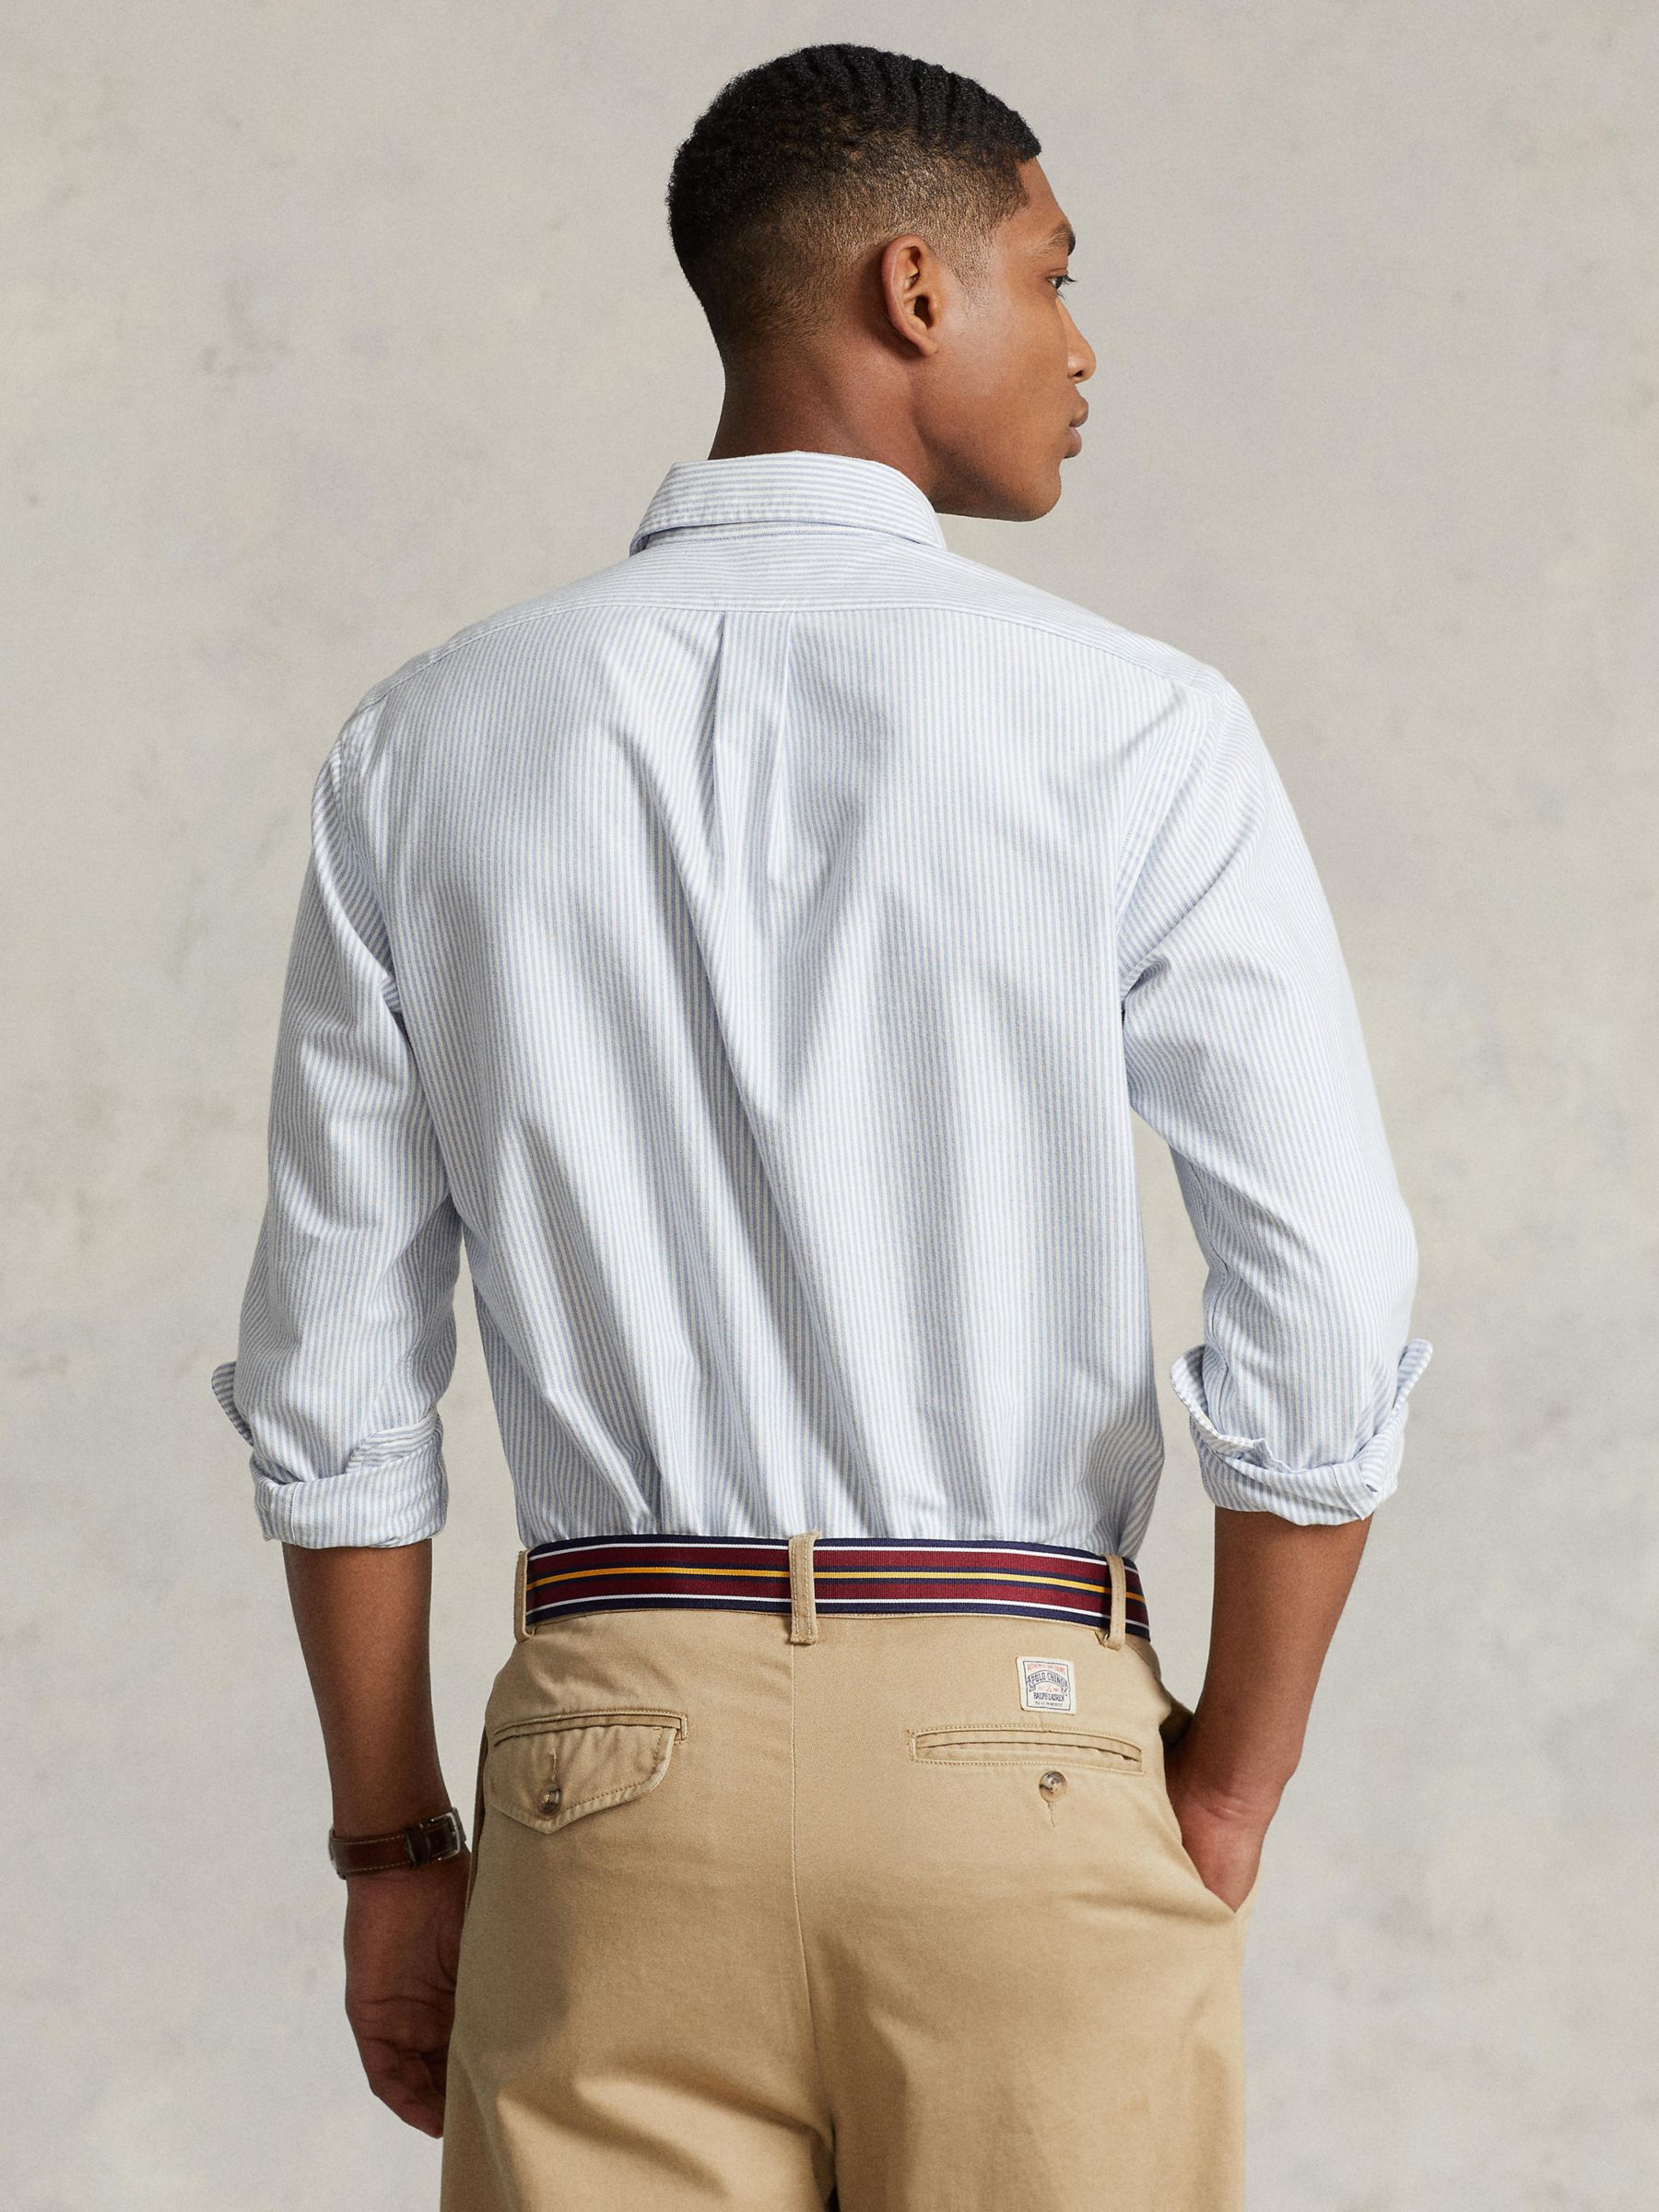 Polo Ralph Lauren Slim Fit Striped Oxford Shirt, Blue/White, S